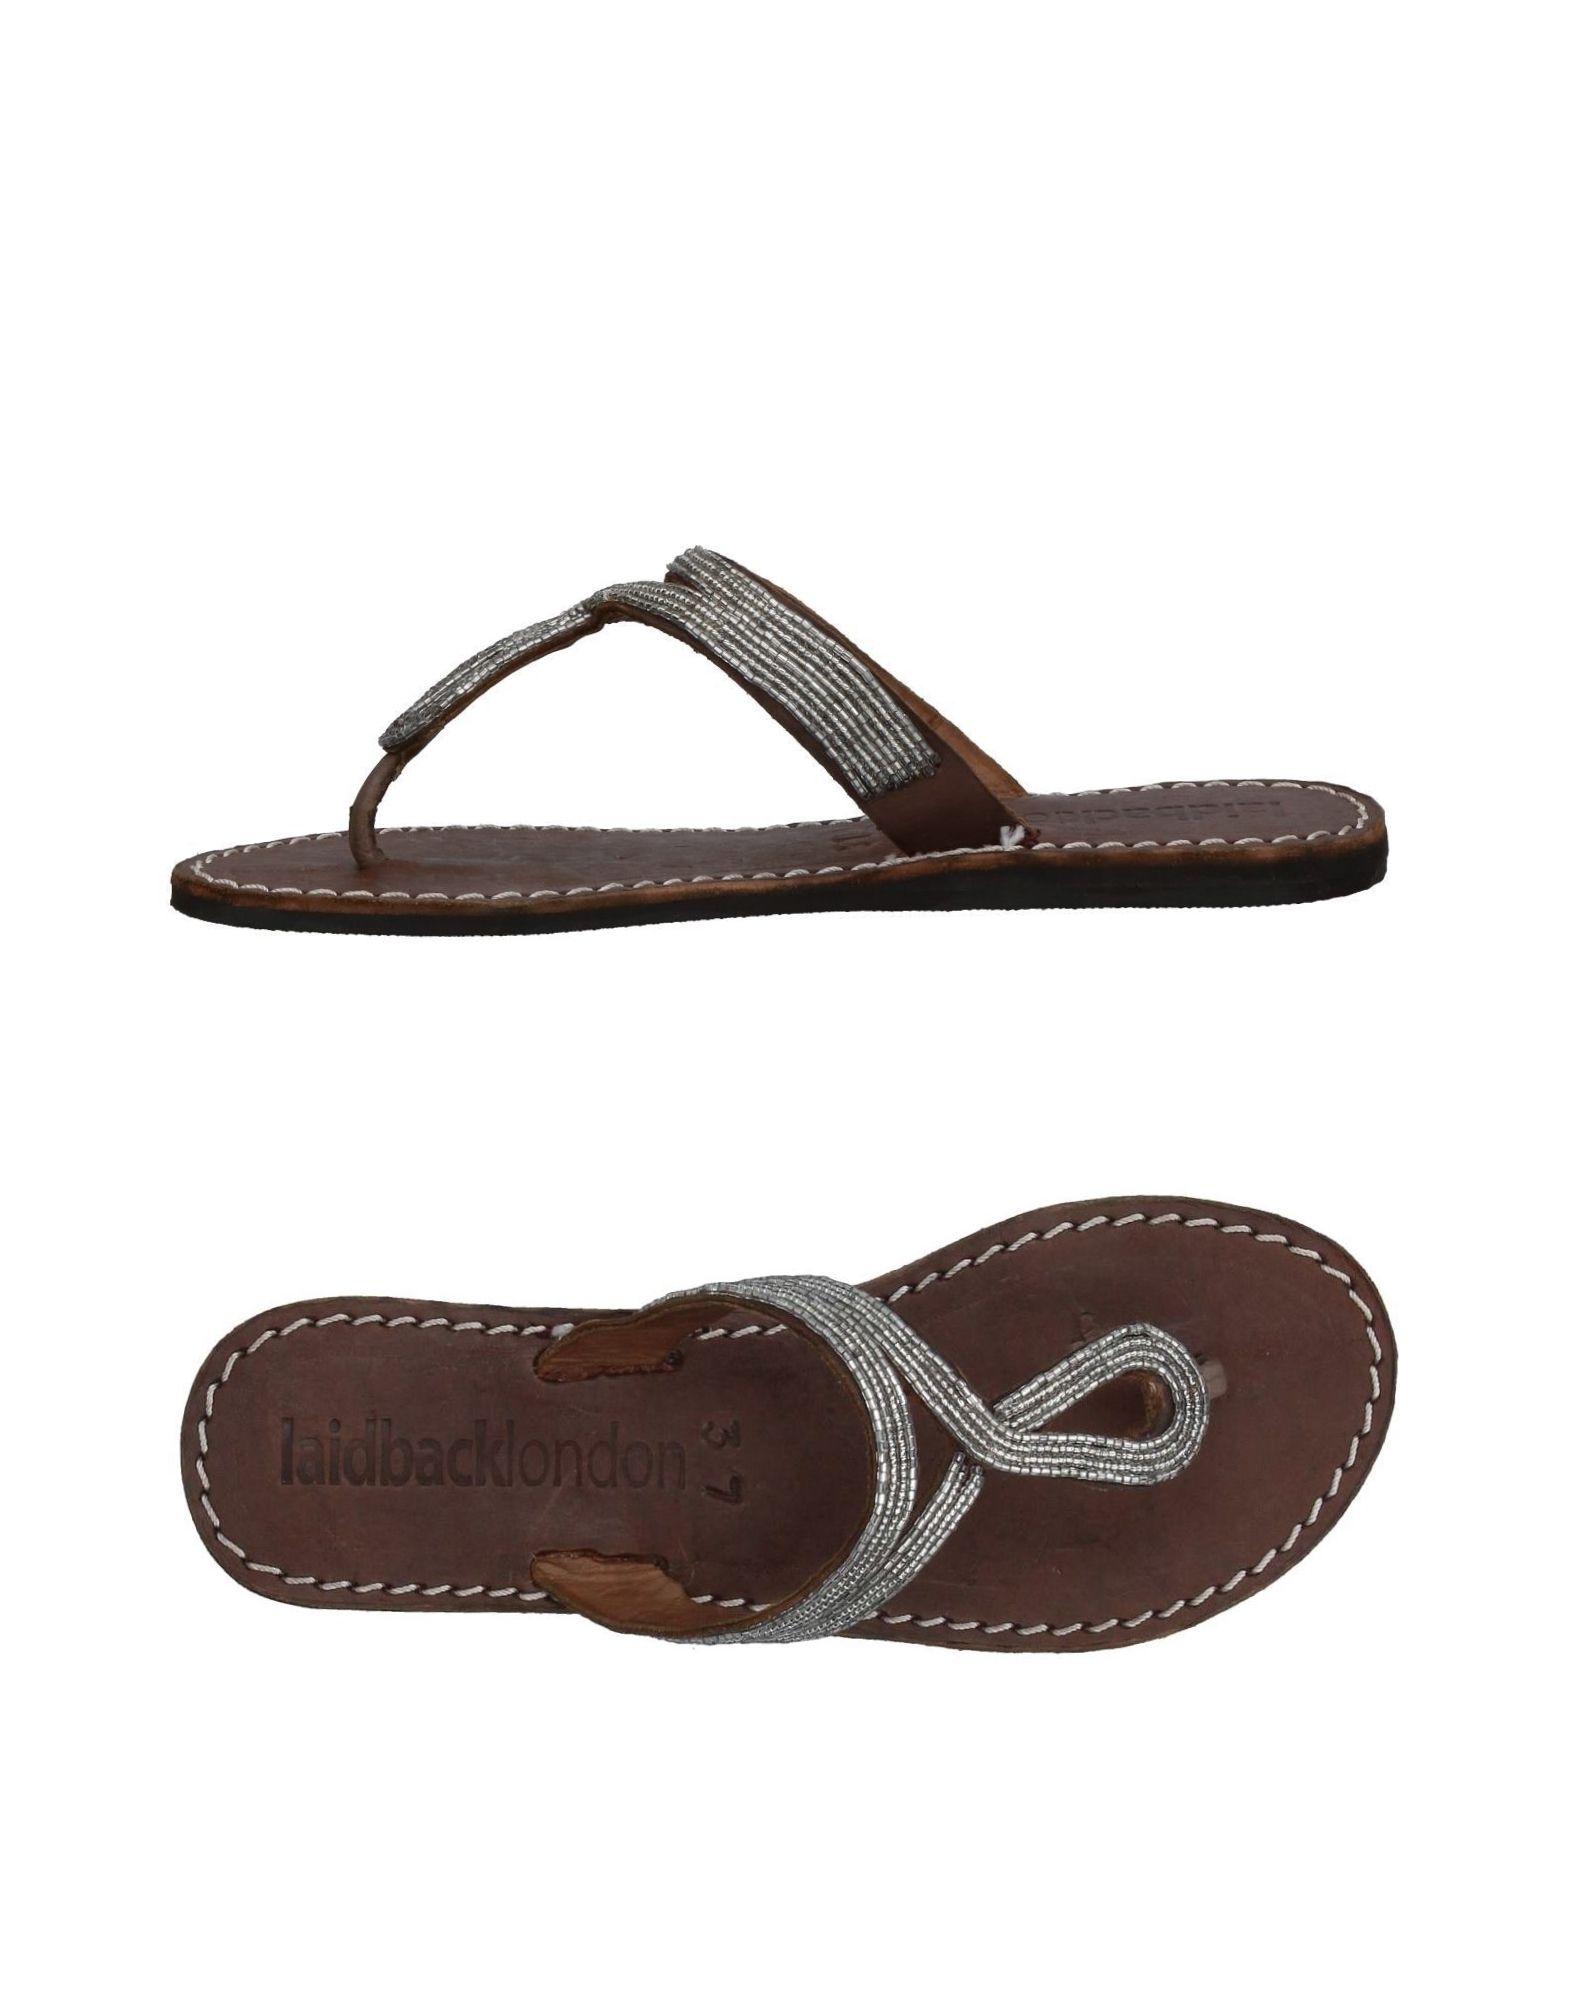 Laidbacklondon Leather Toe Post Sandal in Dark Brown (Brown) - Lyst